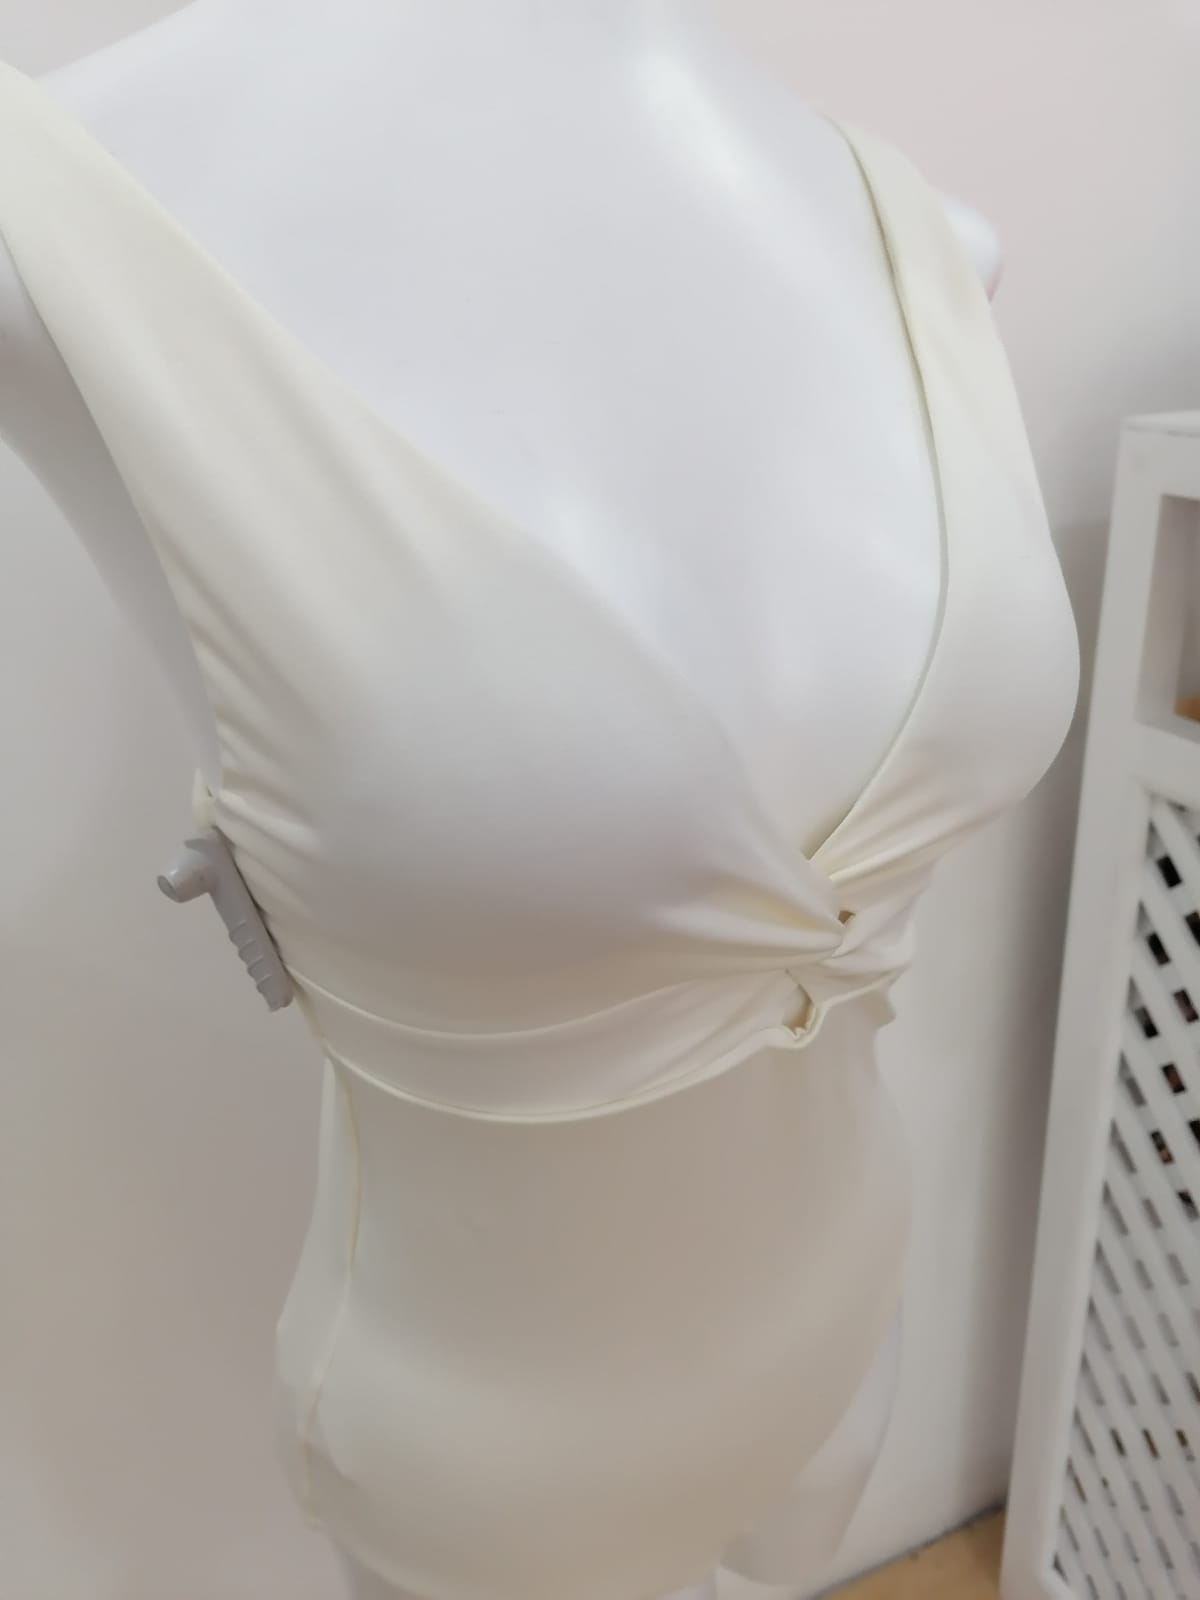 Entero halter V Color liso Blanco Cobertura intermedia de la parte de atrás Tirantes ajustables Pads removibles | Bikini Town